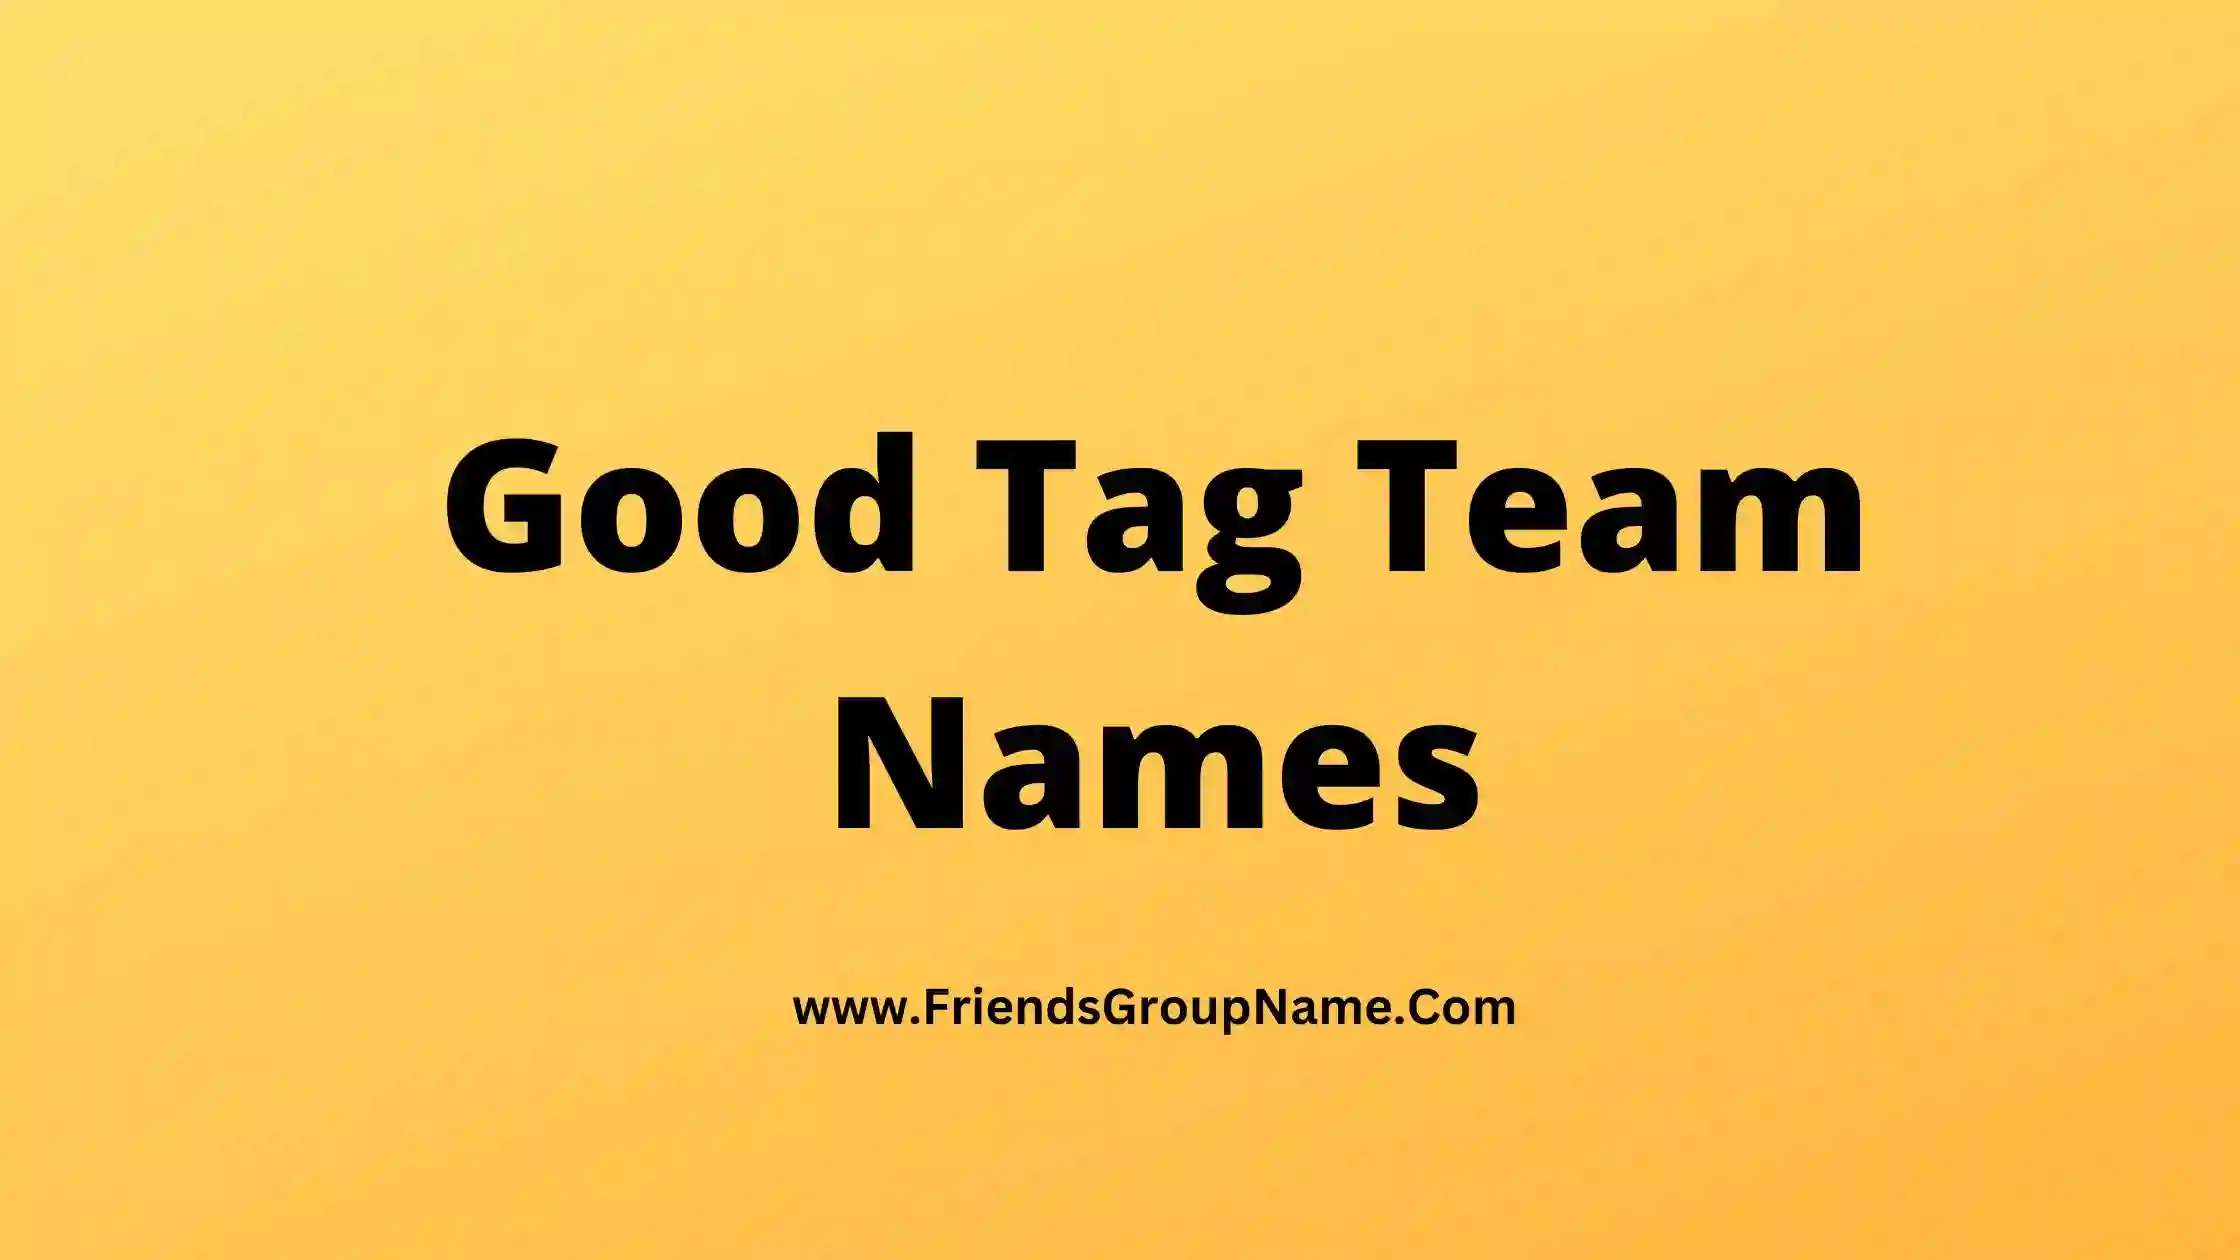 Good Tag Team Names